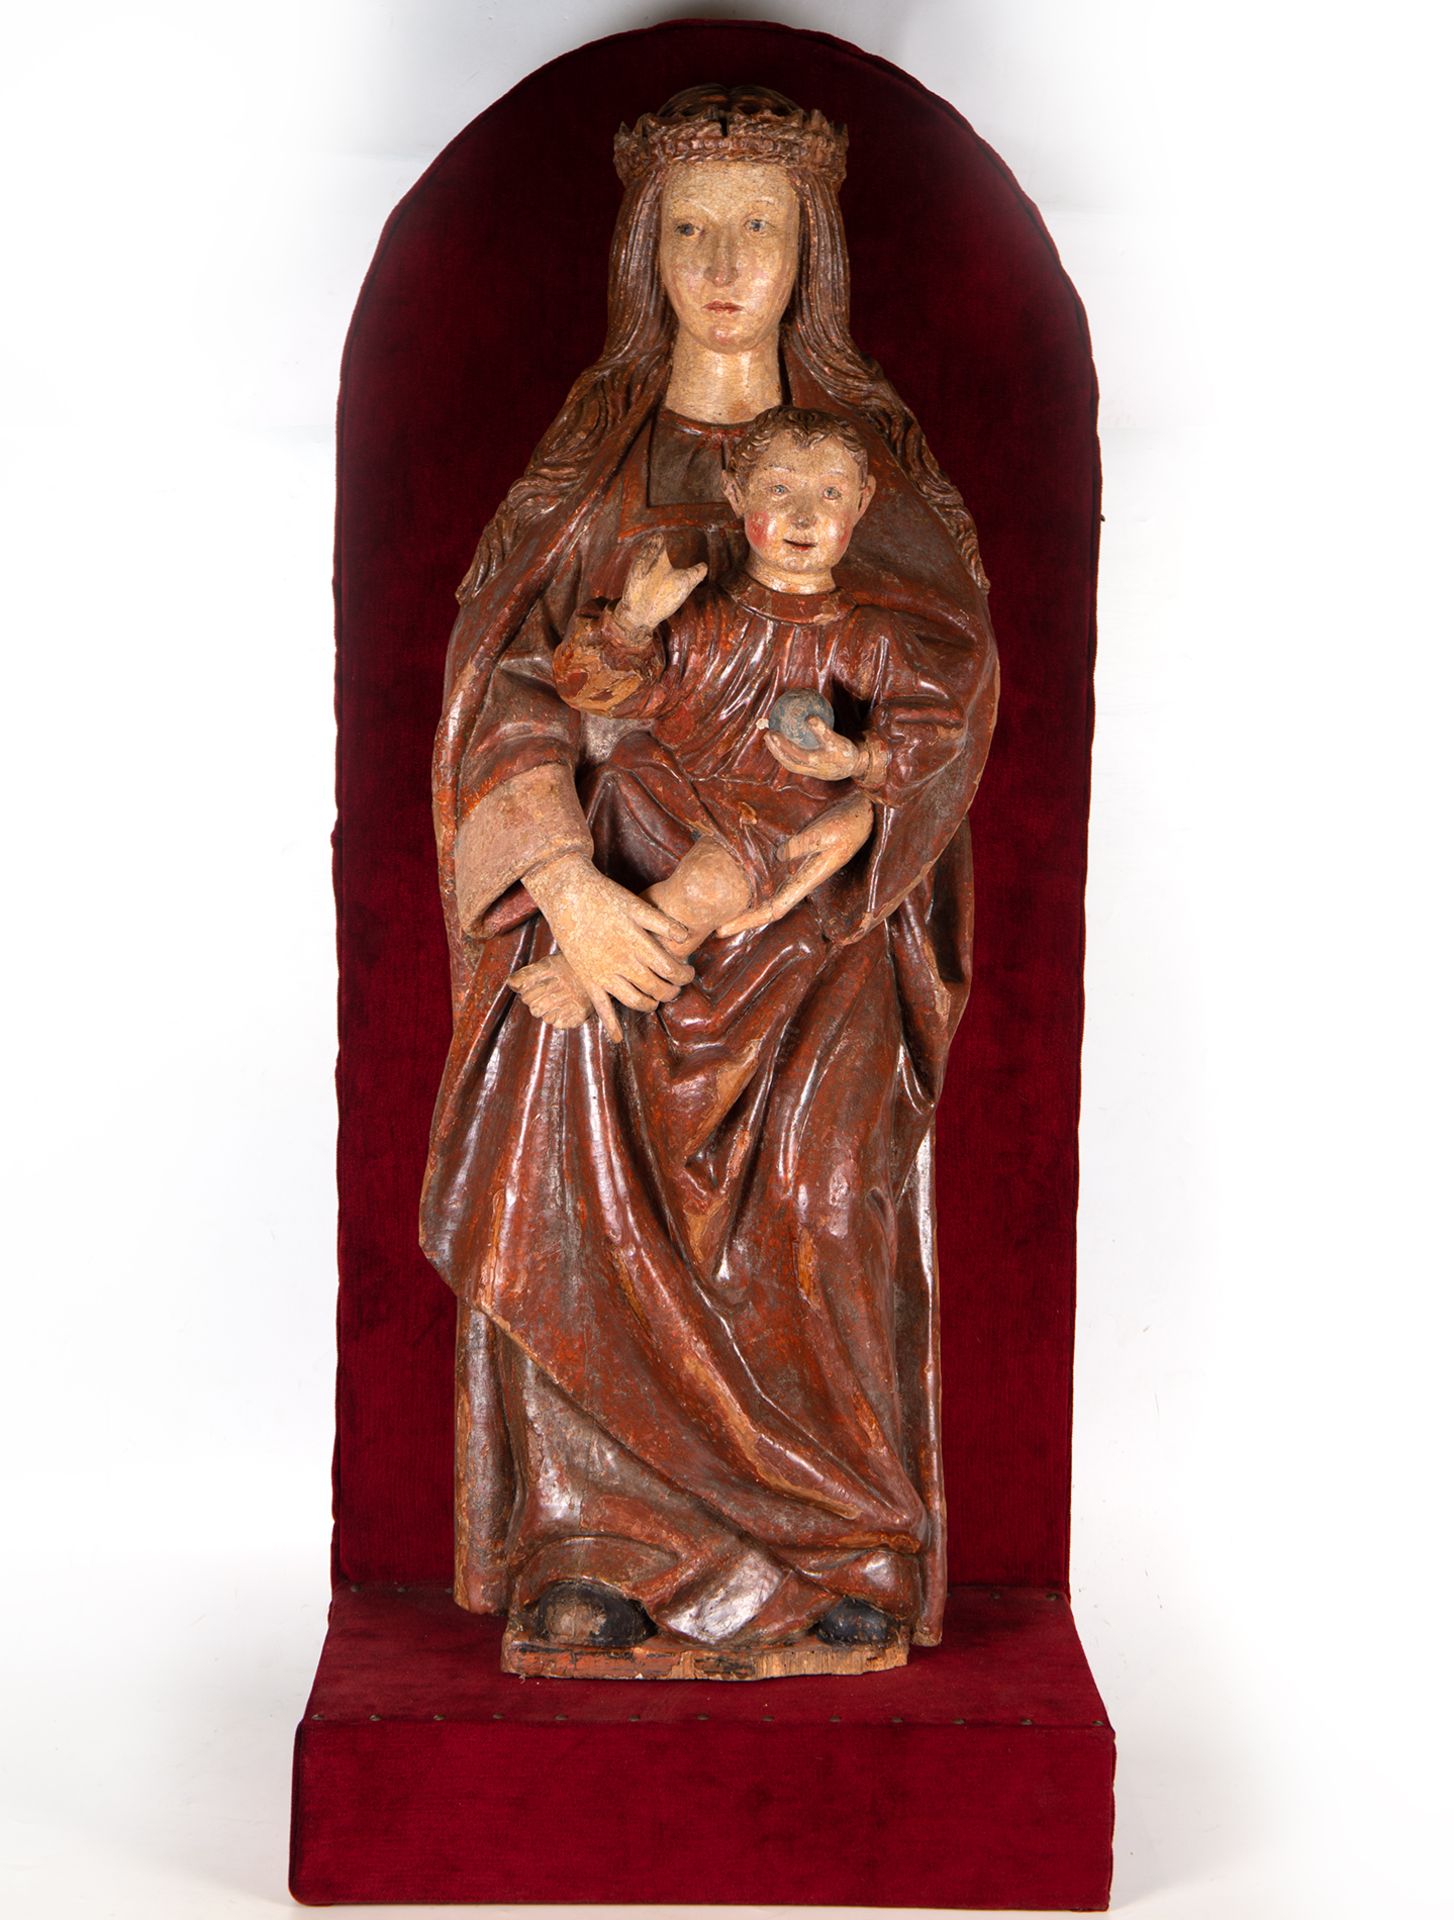 Large Virgin of Mechelen with Child in Arms, school of Mechelen, XV - XVI century